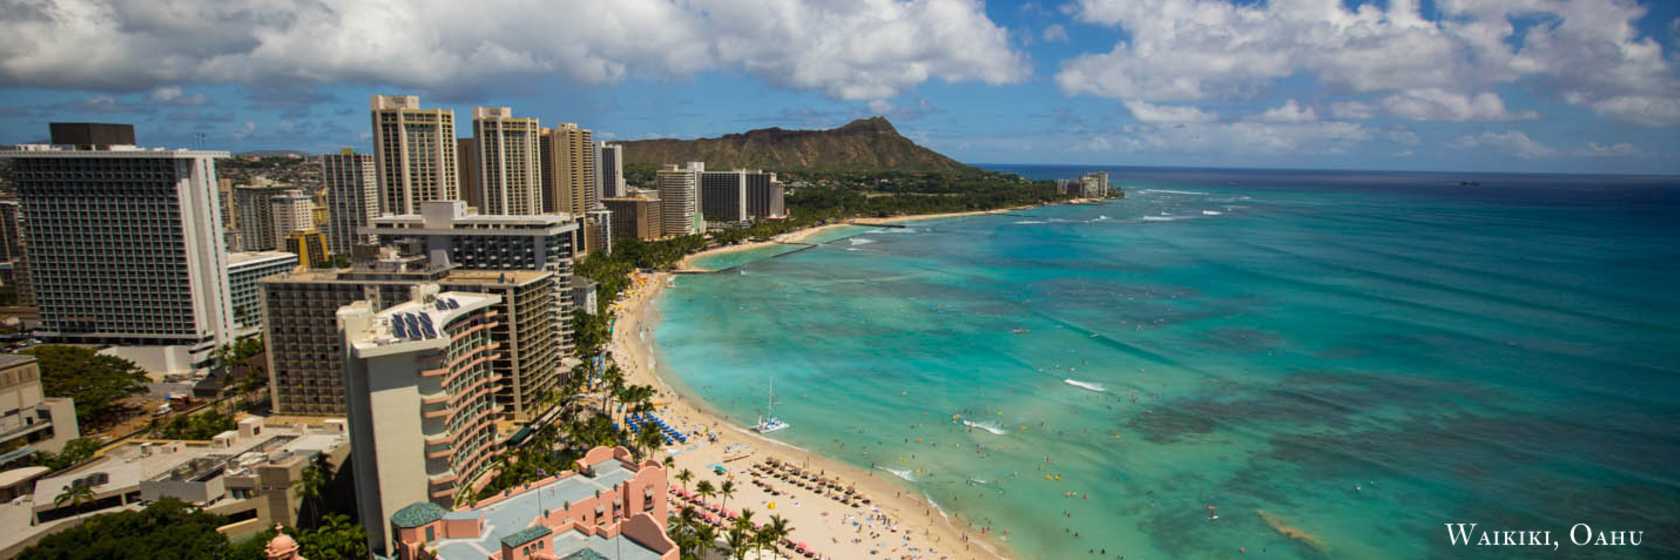 Oahu - Waikiki